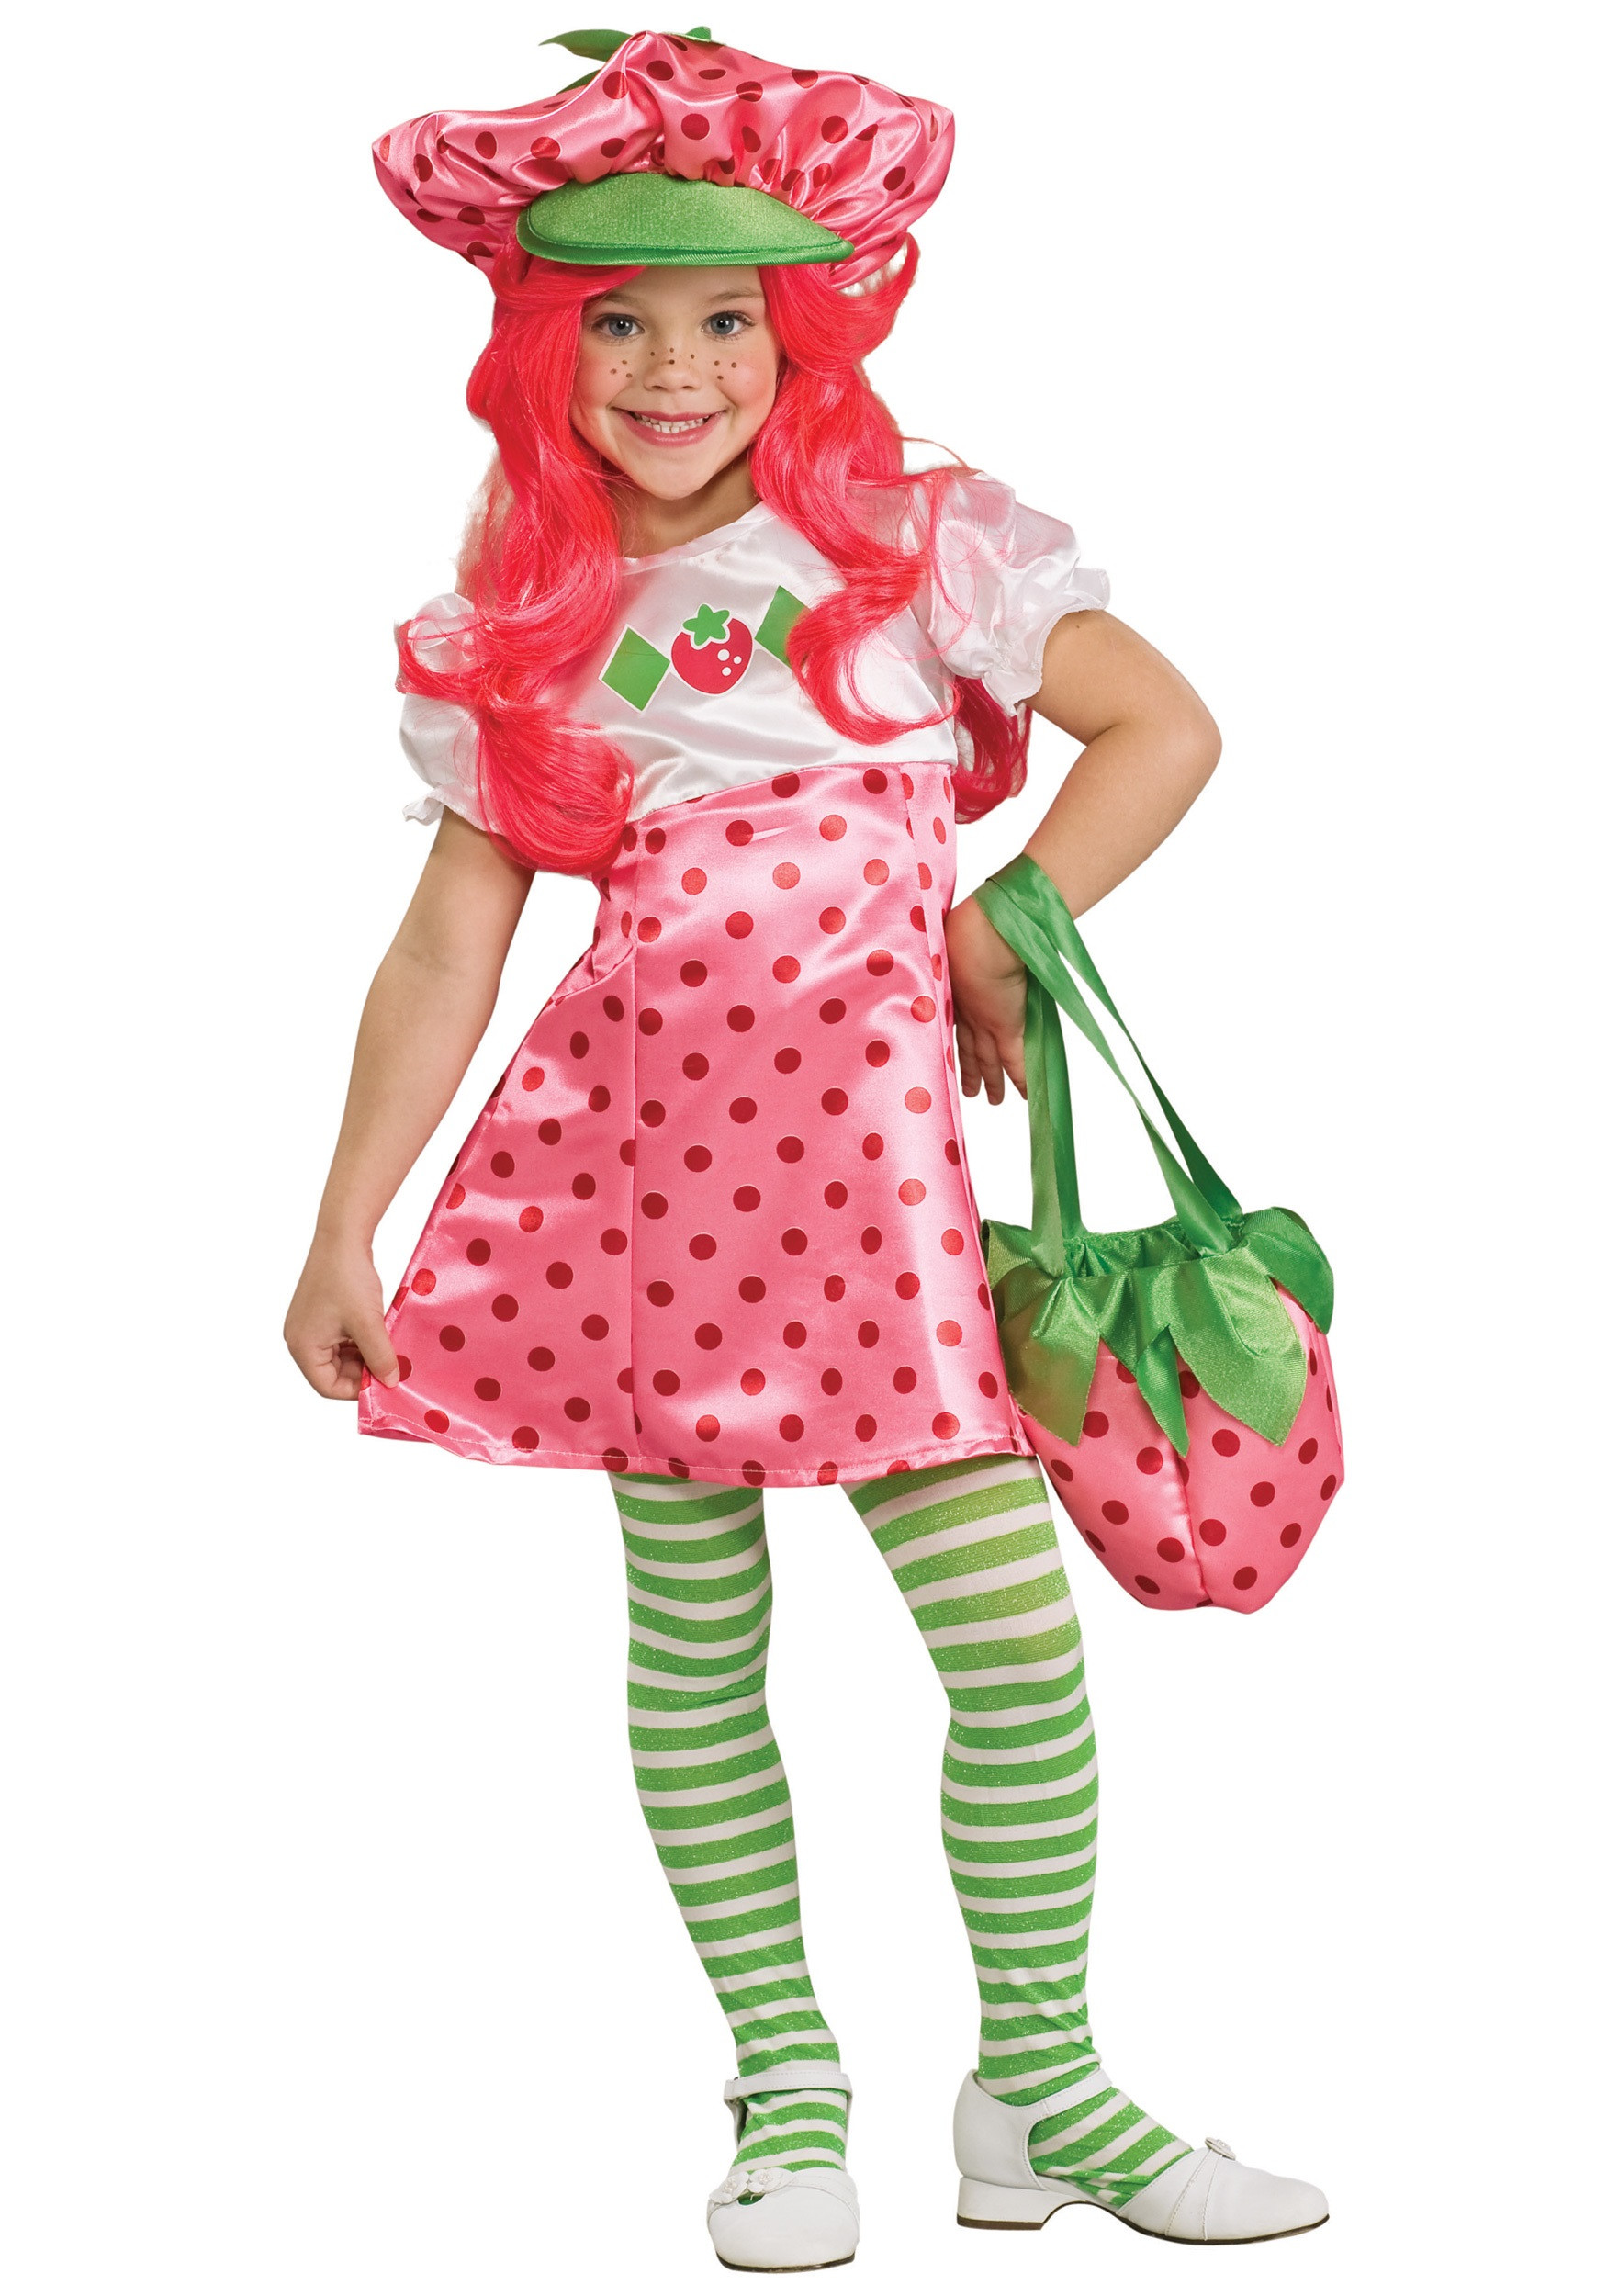 Strawberry Shortcake Halloween Costume
 Child Strawberry Shortcake Costume